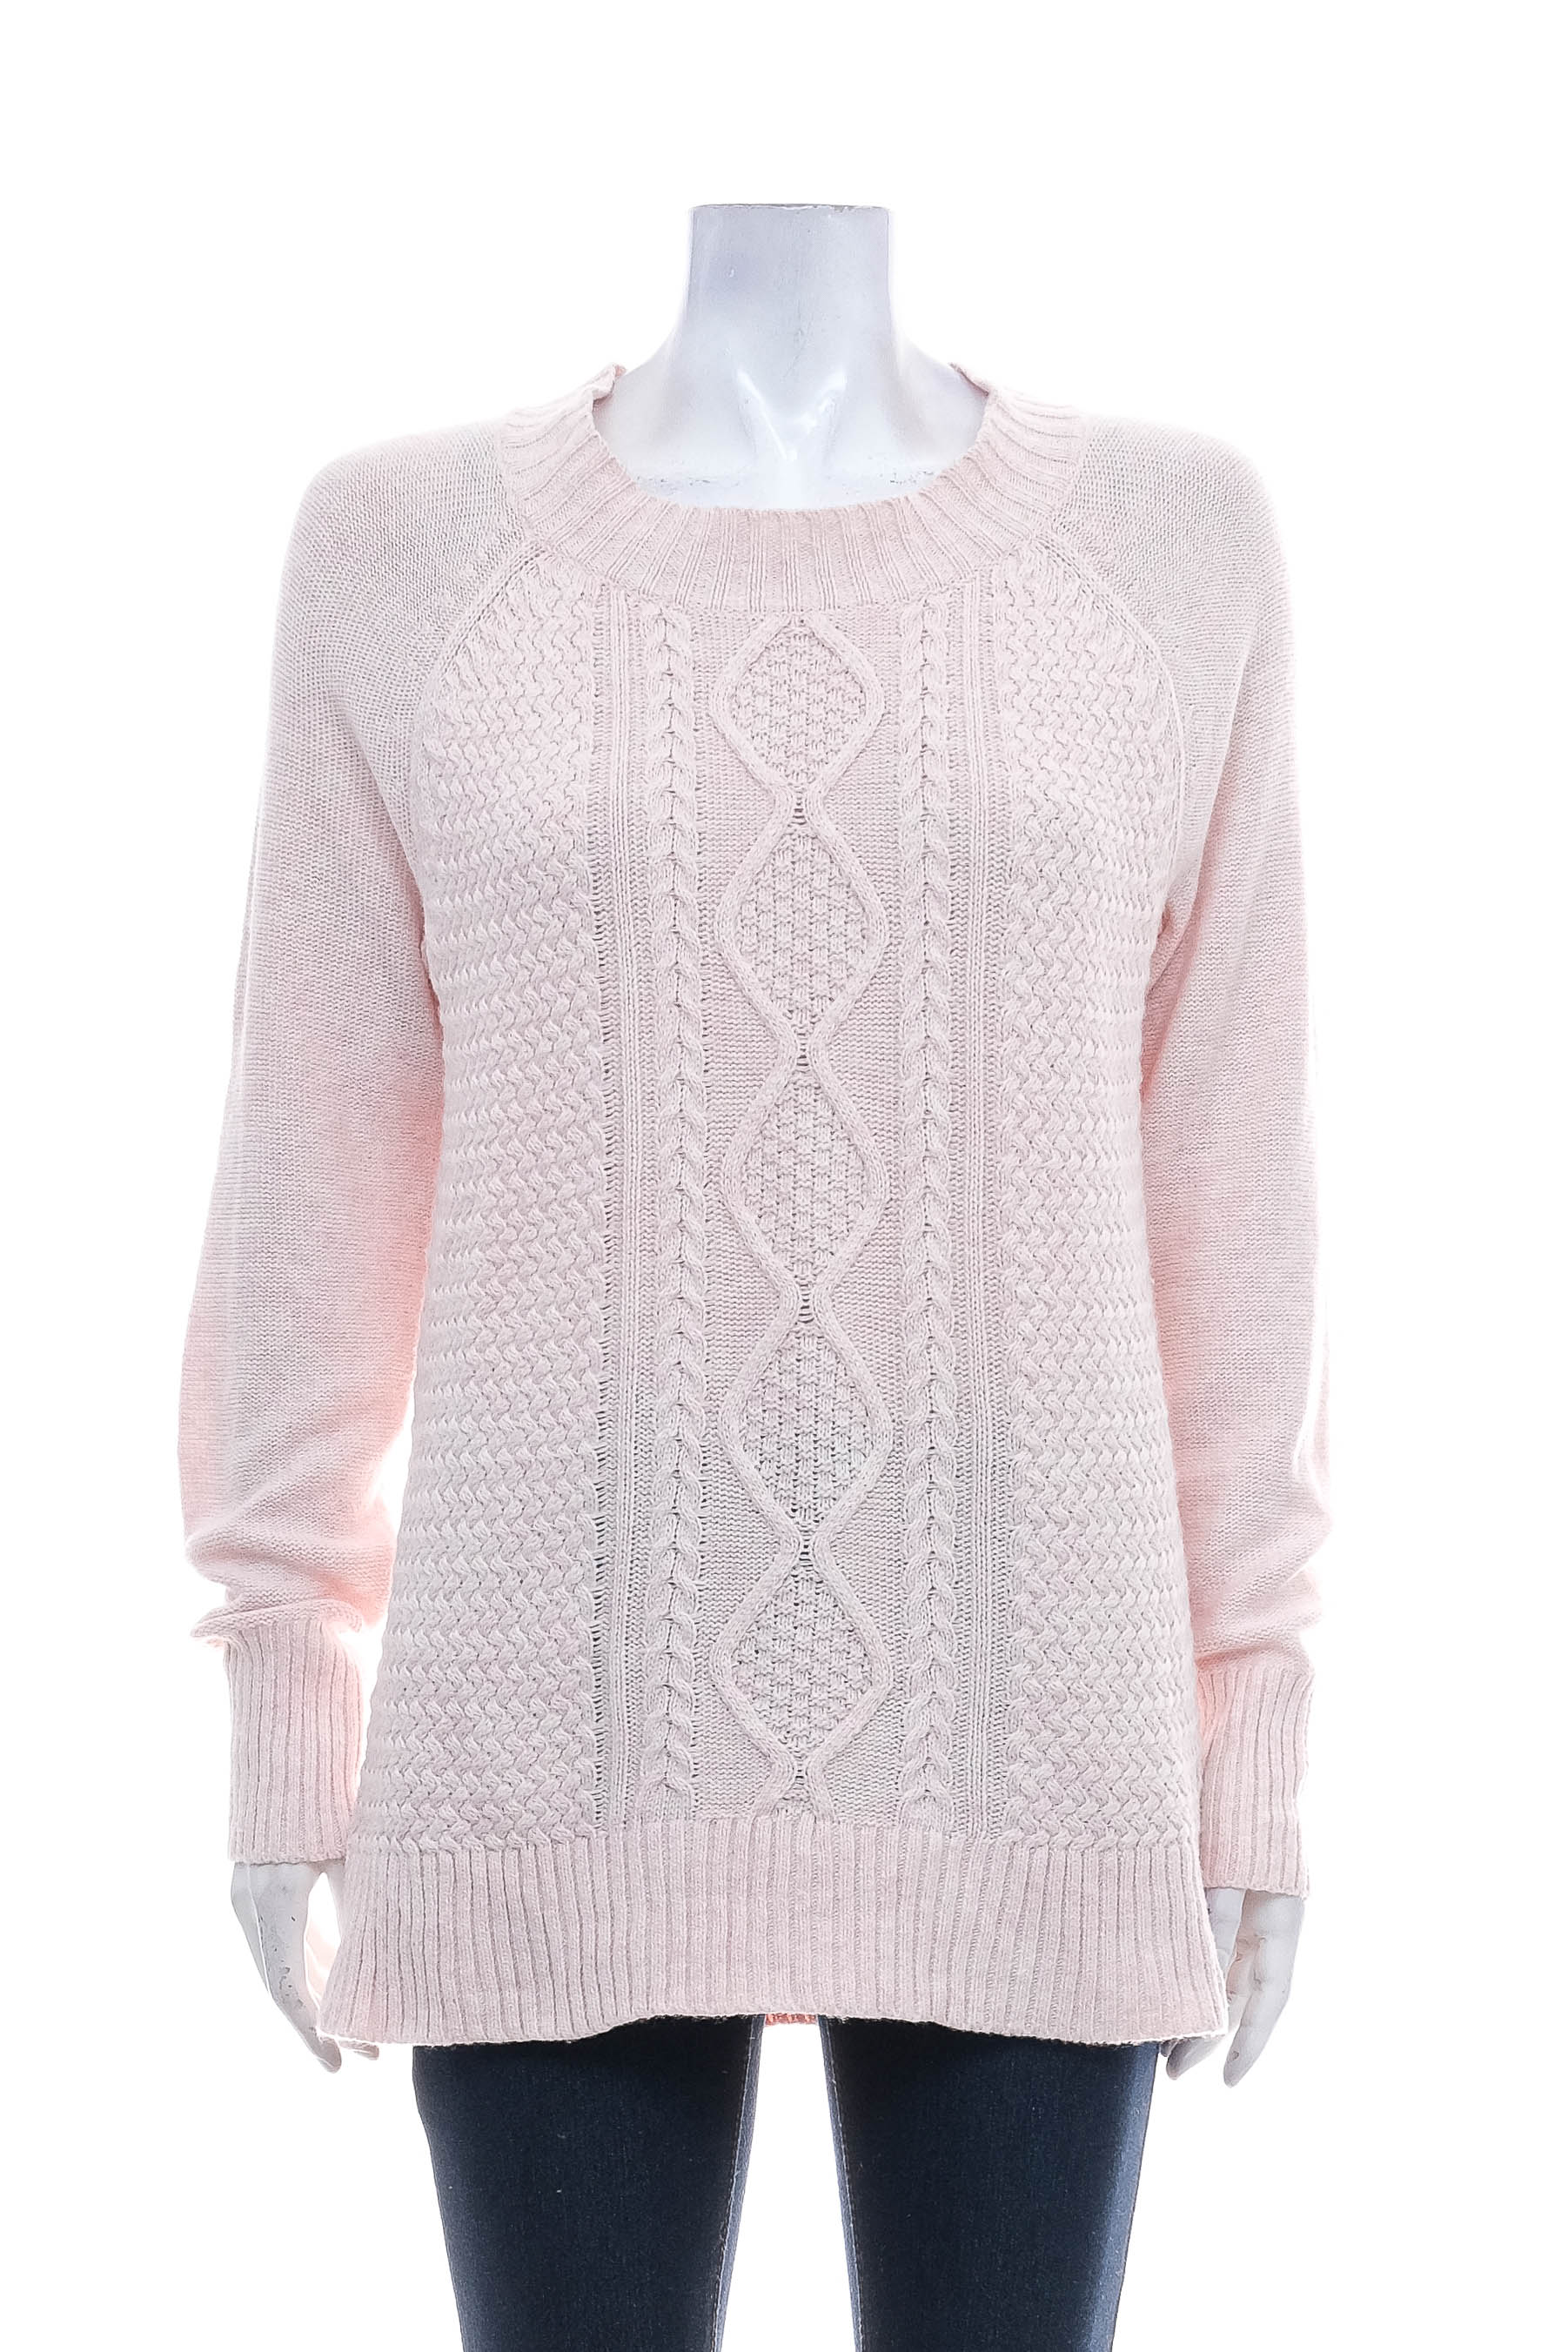 Women's sweater - Merona - 0